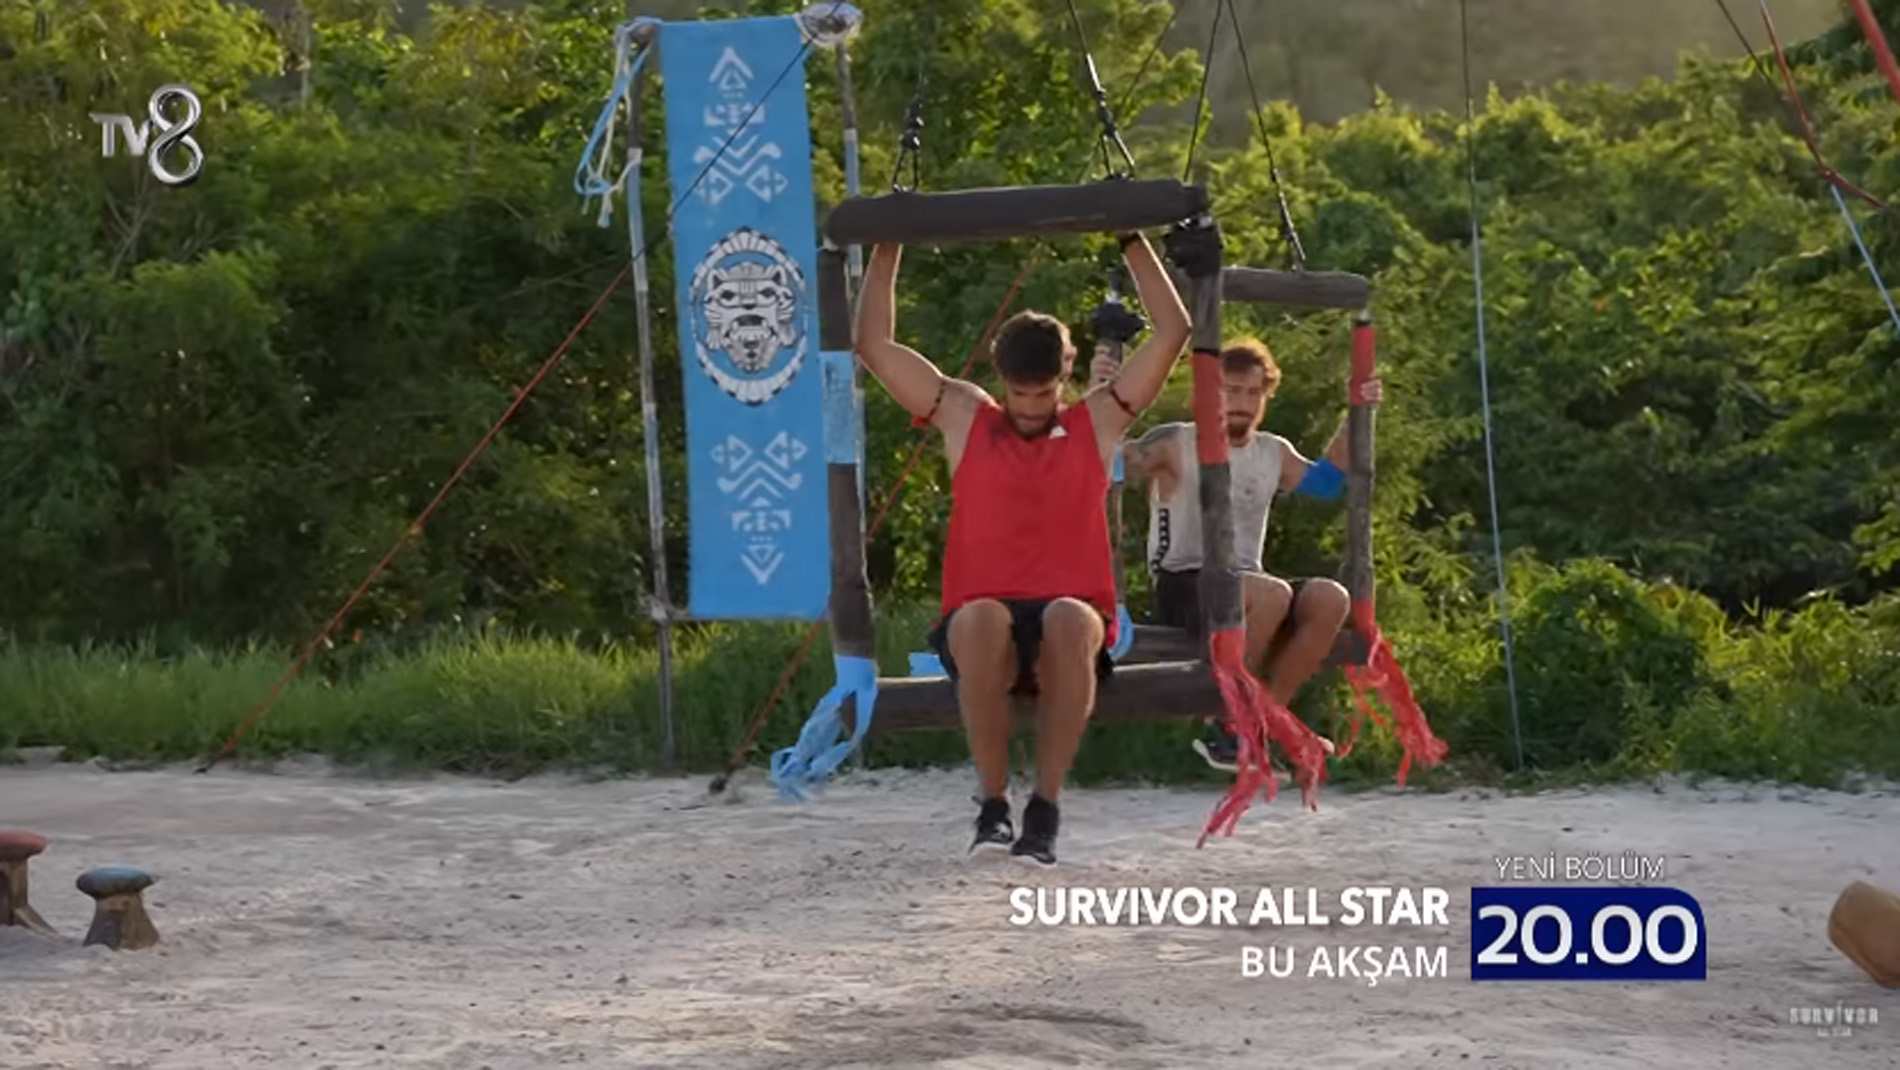 TV8 Survivor All Star 97. bölüm full, tek parça izle | Survivor All Star son bölüm izle Youtube